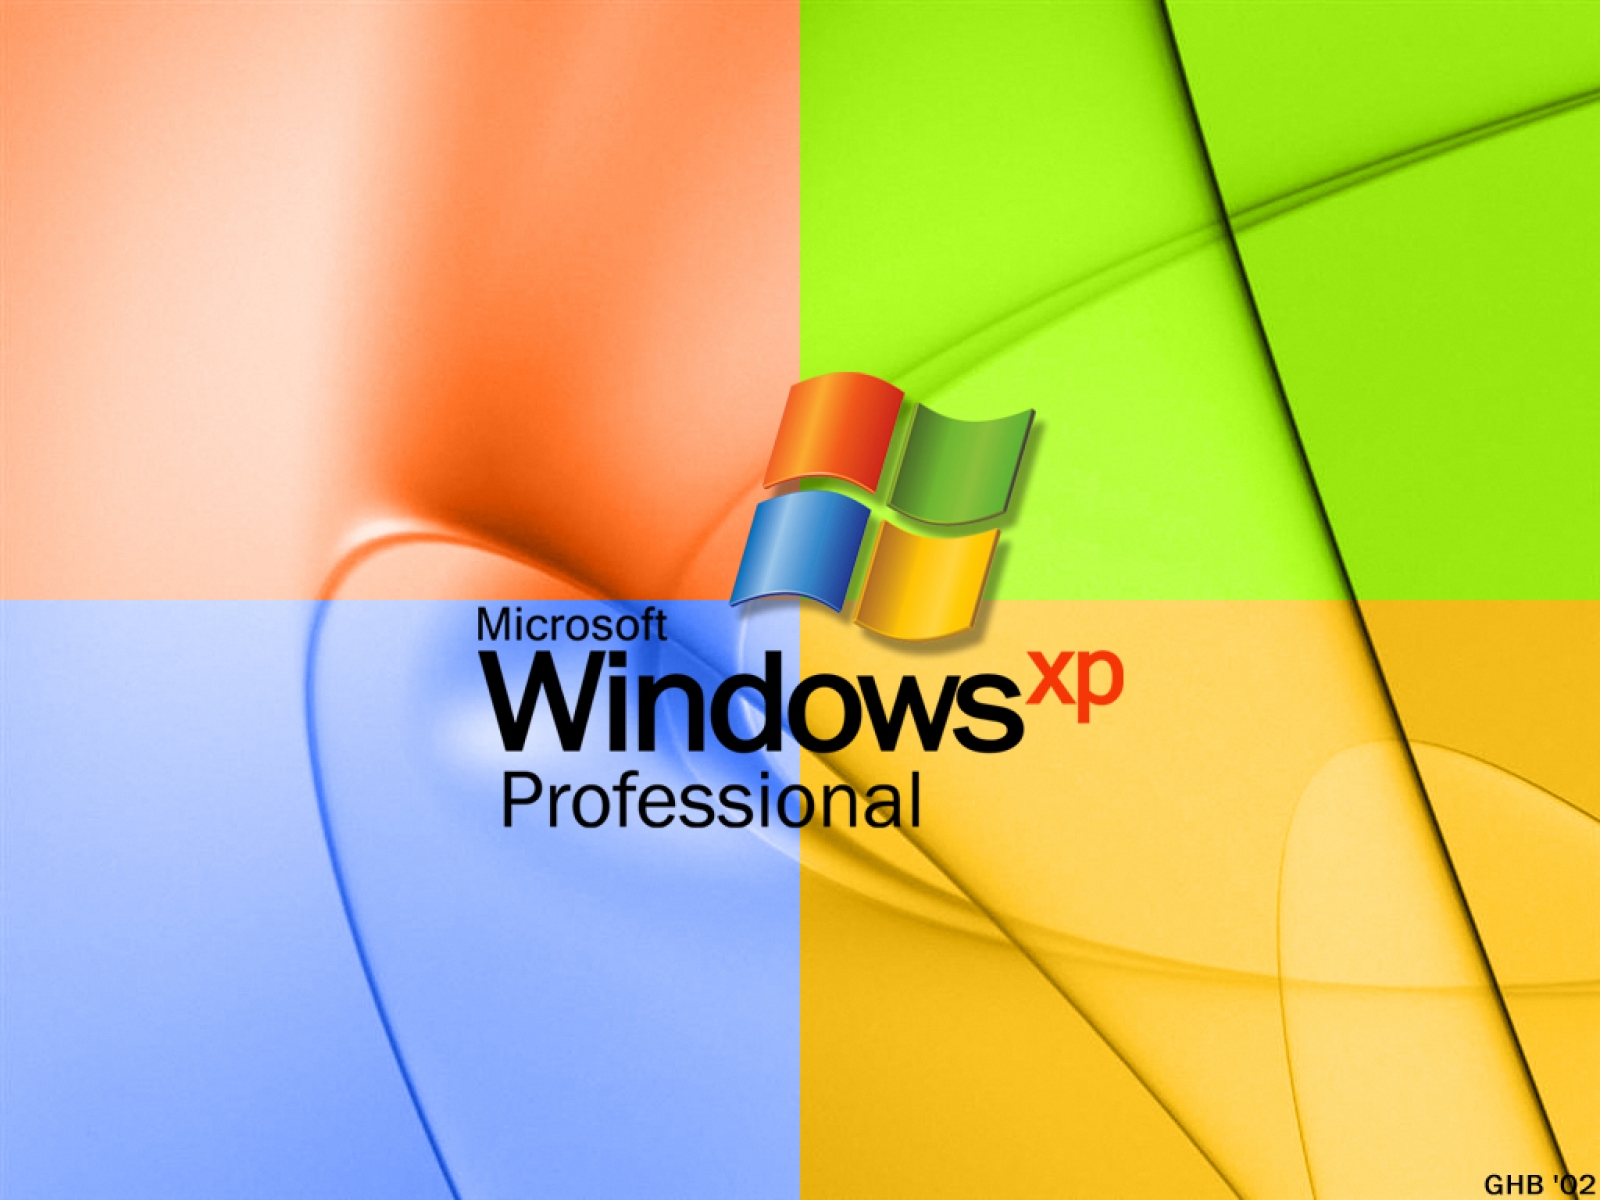 Windows XP pro Wallpaper at Wallpaperist